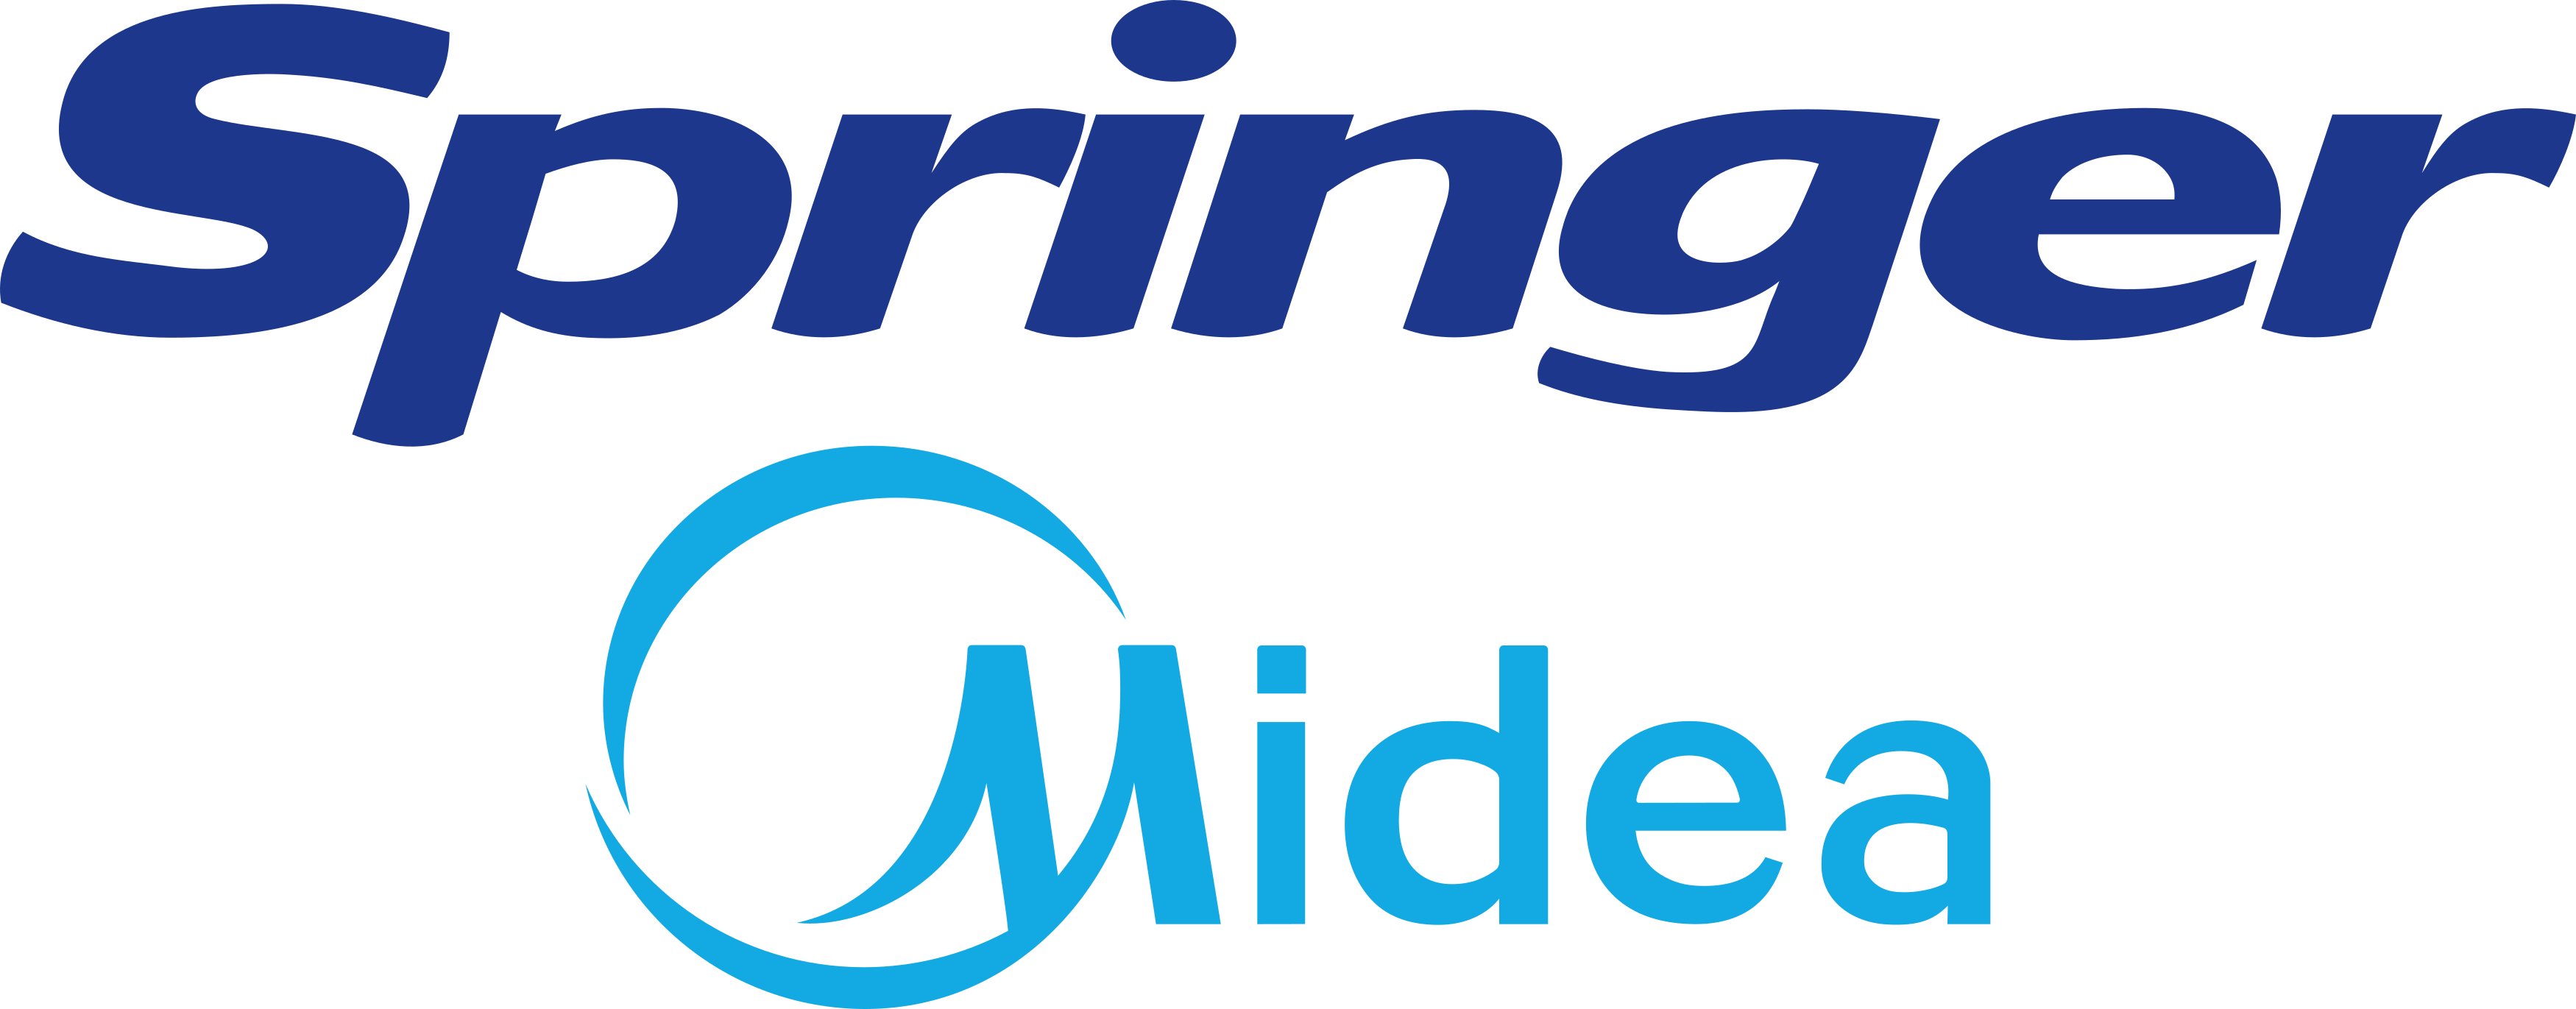 Springer Logo - PNG e Vetor - Download de Logo